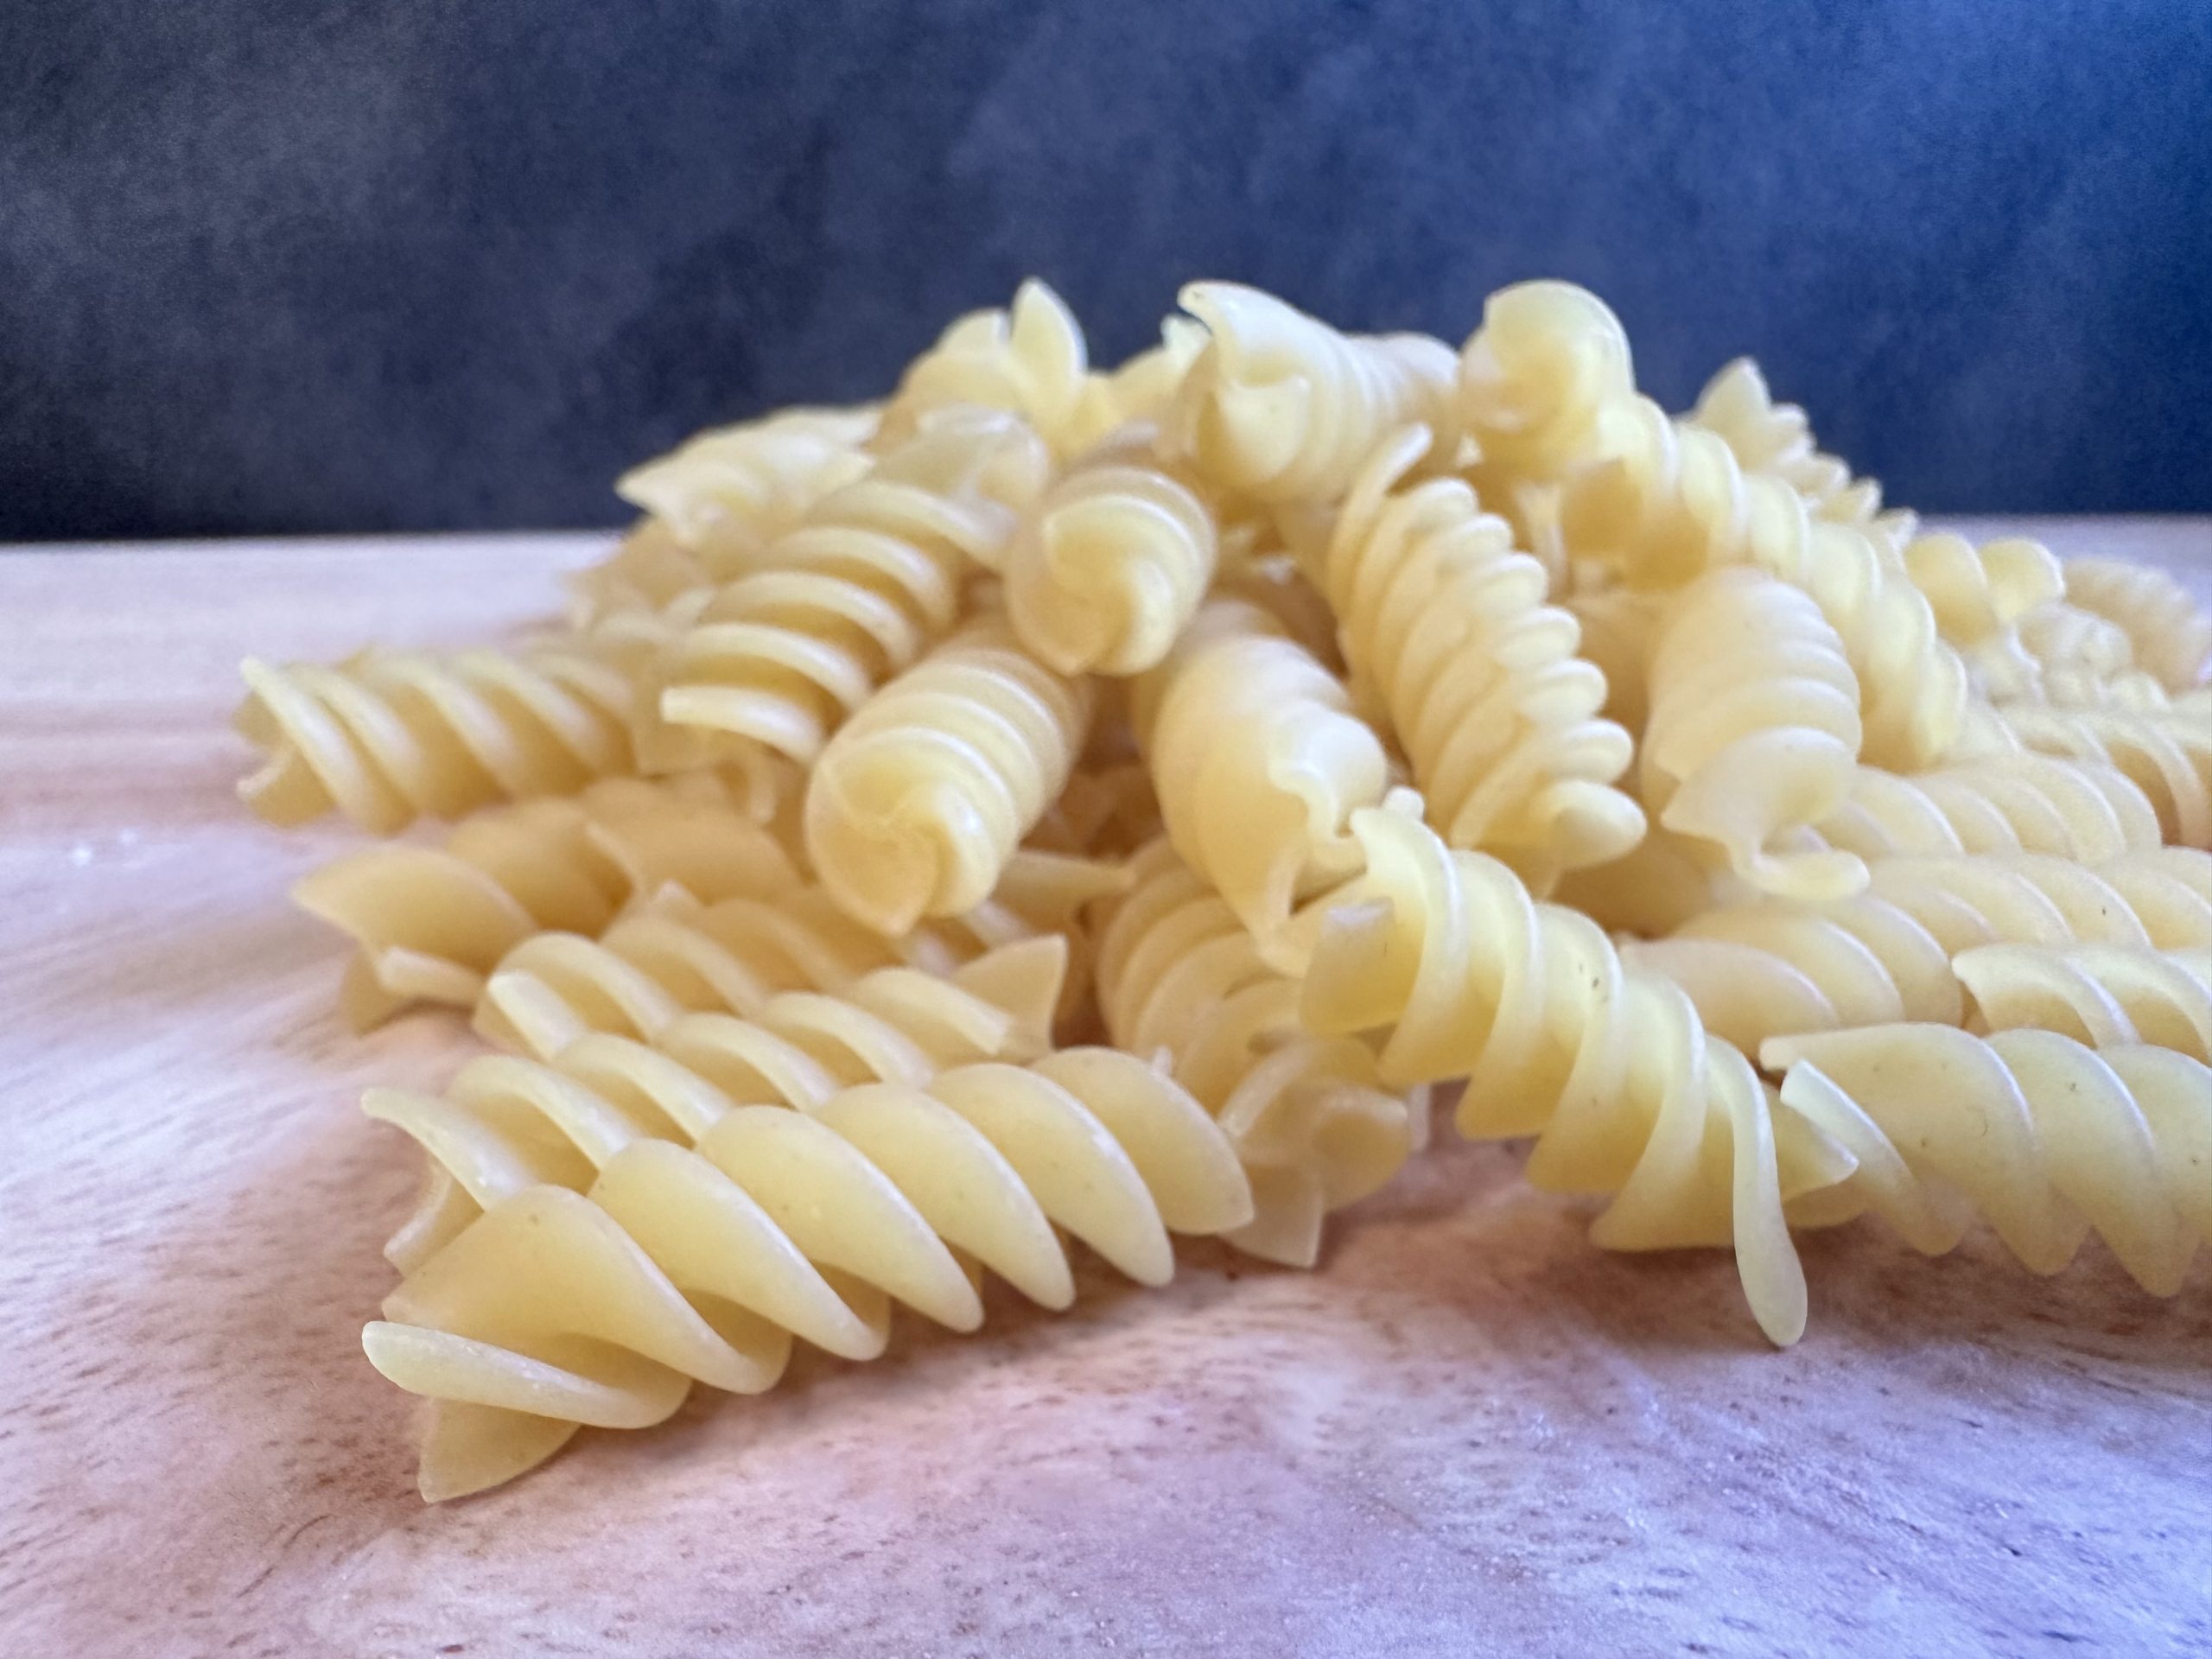 Using Rotini Pasta in Mac and Cheese